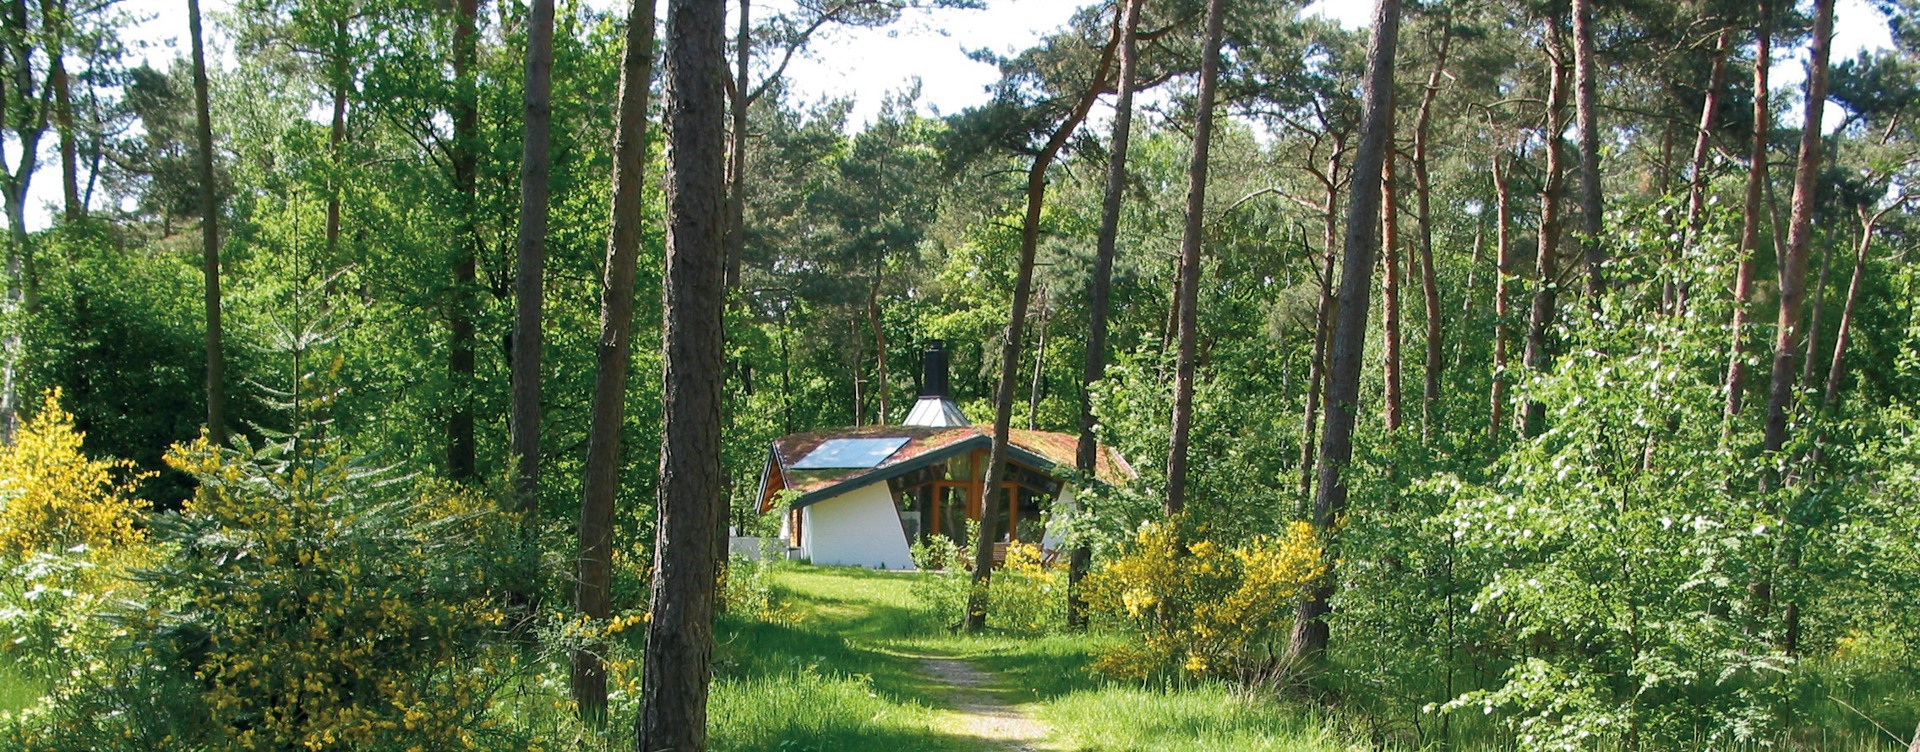 Summio Bungalowpark Herperduin, Noord-Brabant